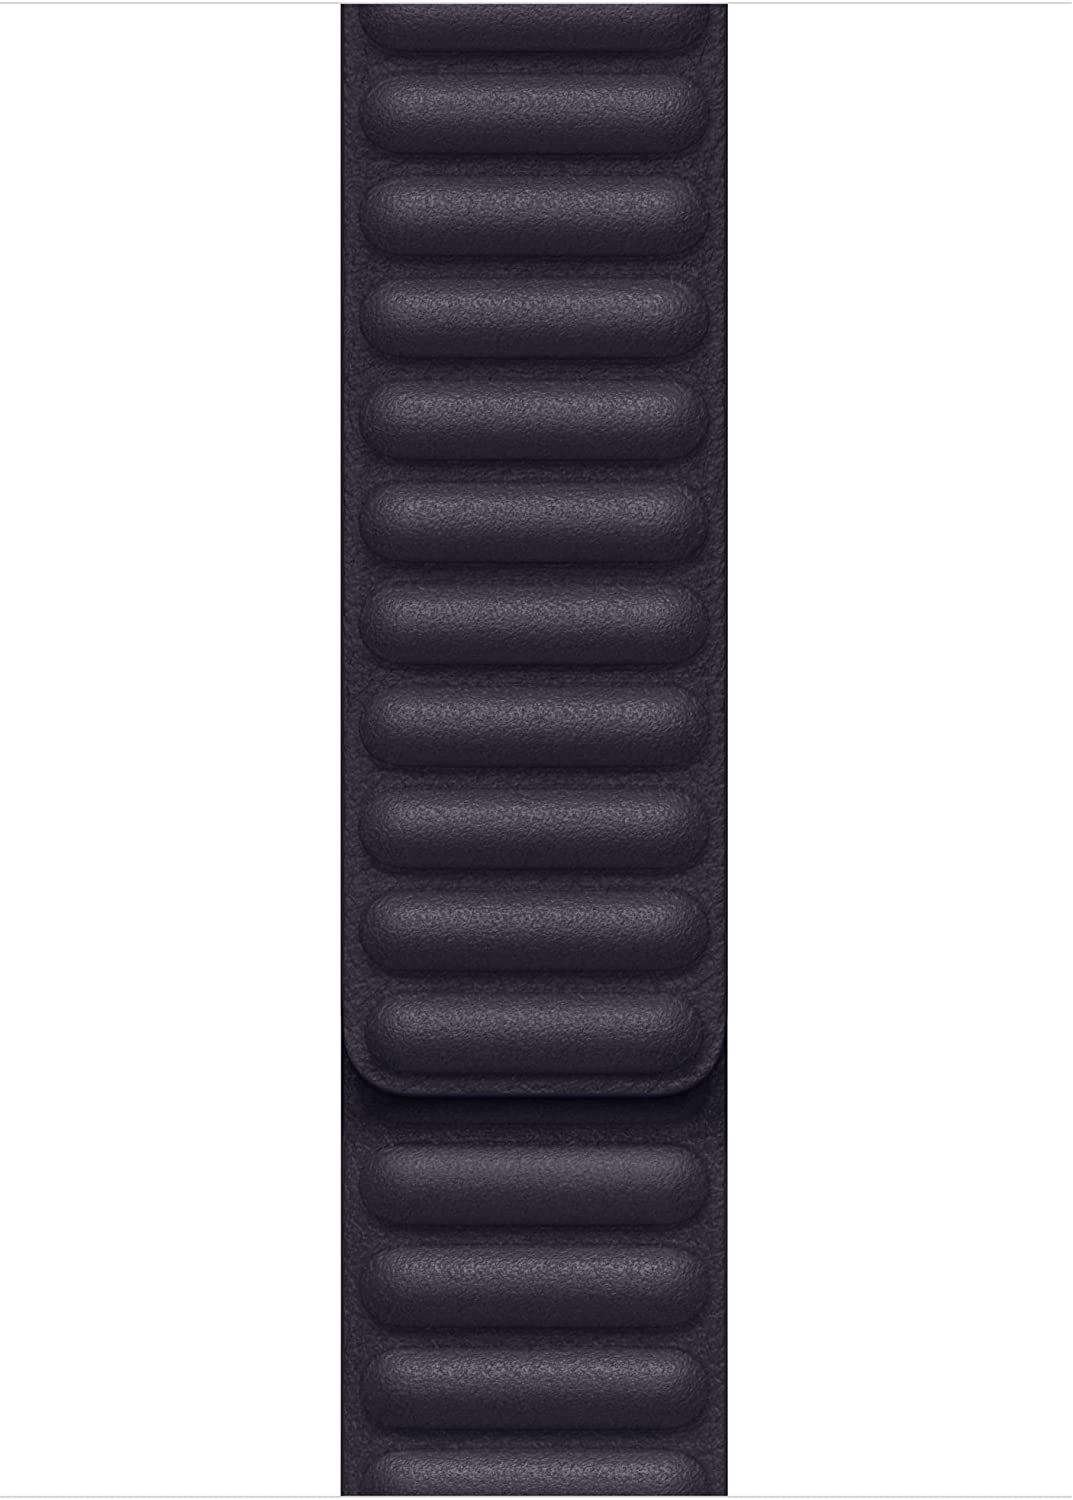 PBI-Apple-Watch-Ultra-Band---Leather-Band-1